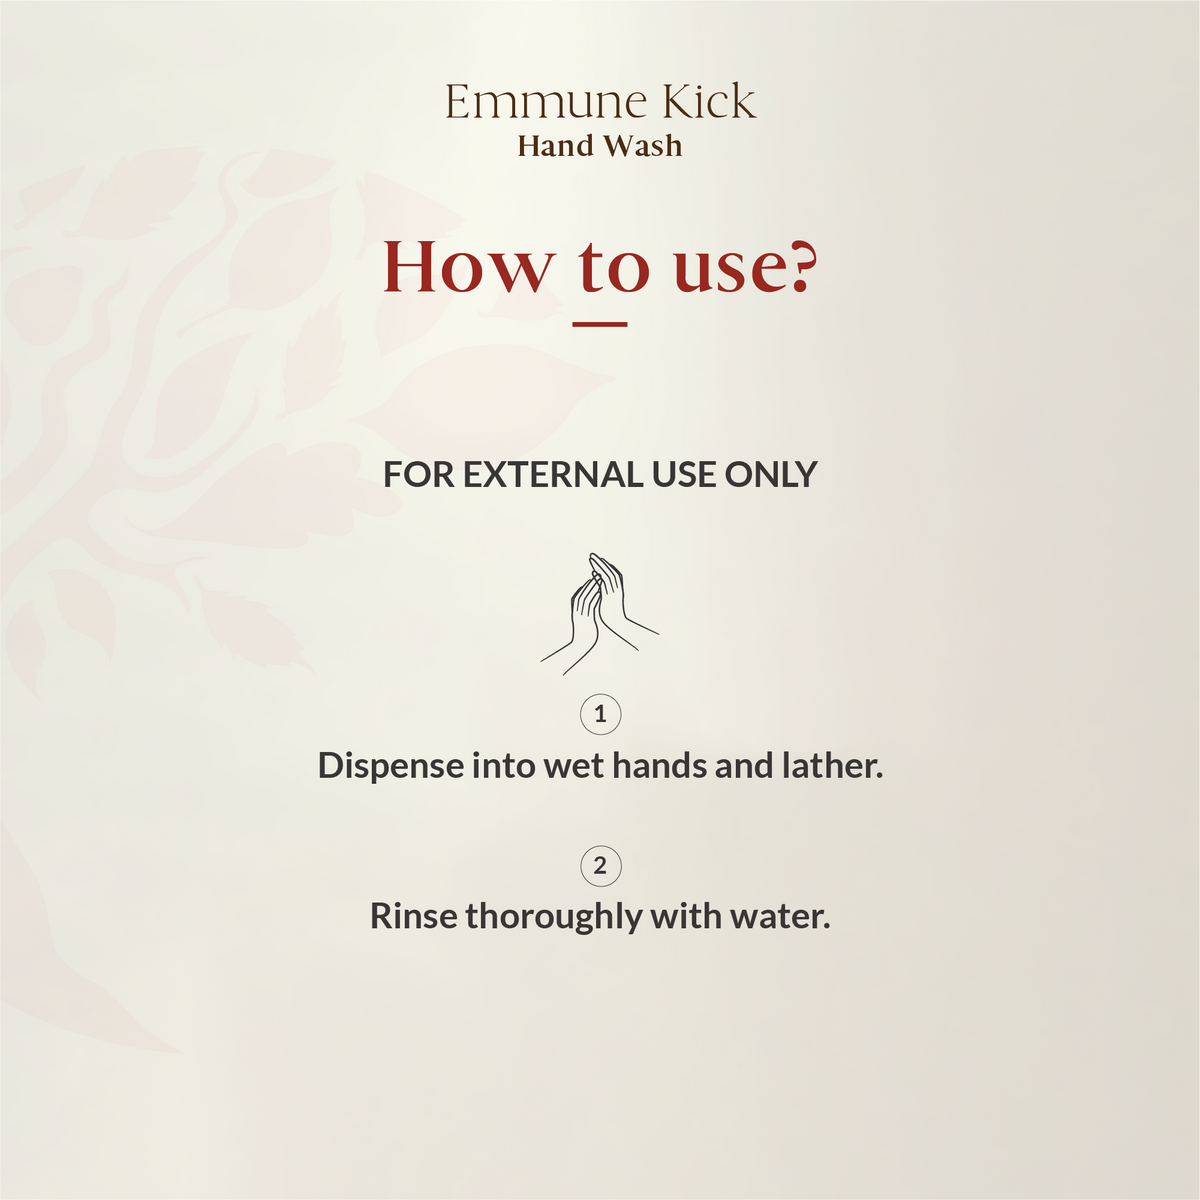 Emmune Kick Hand Wash 500ml